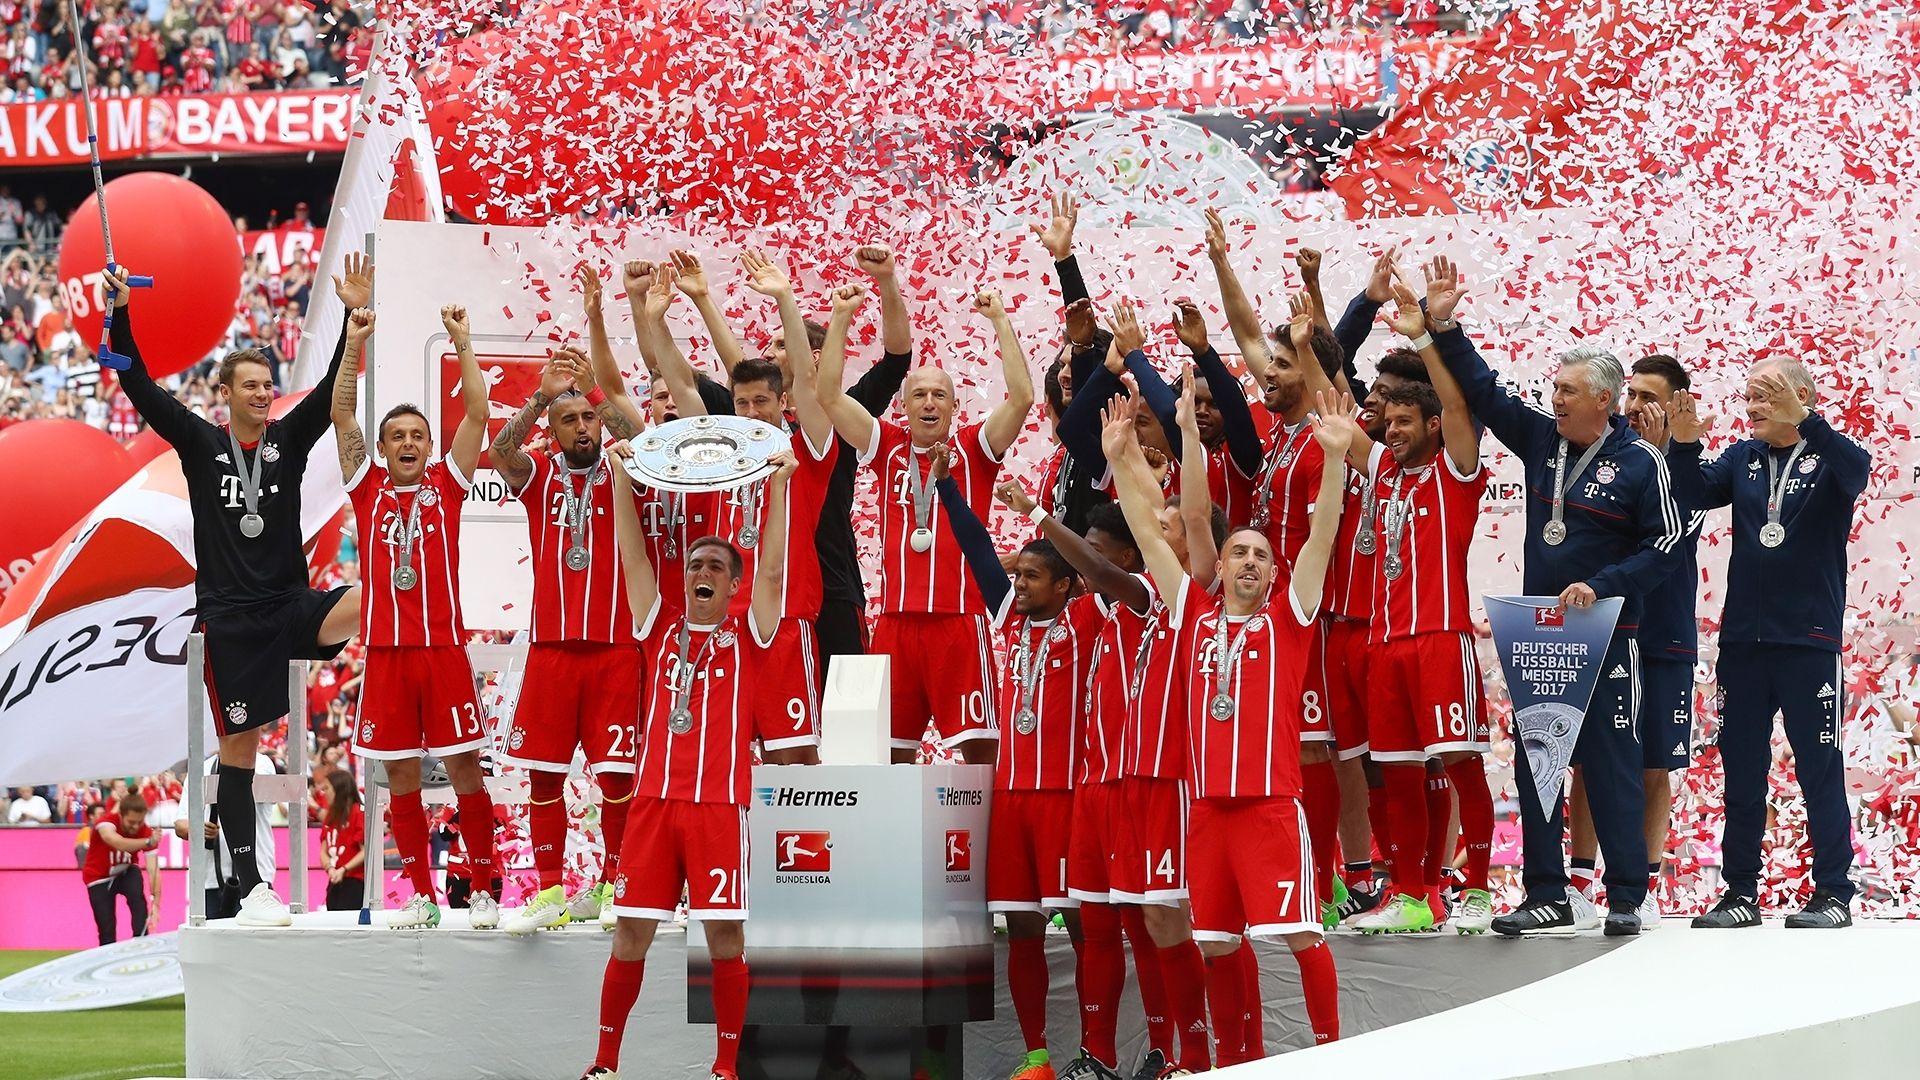 The 2018 German Champions